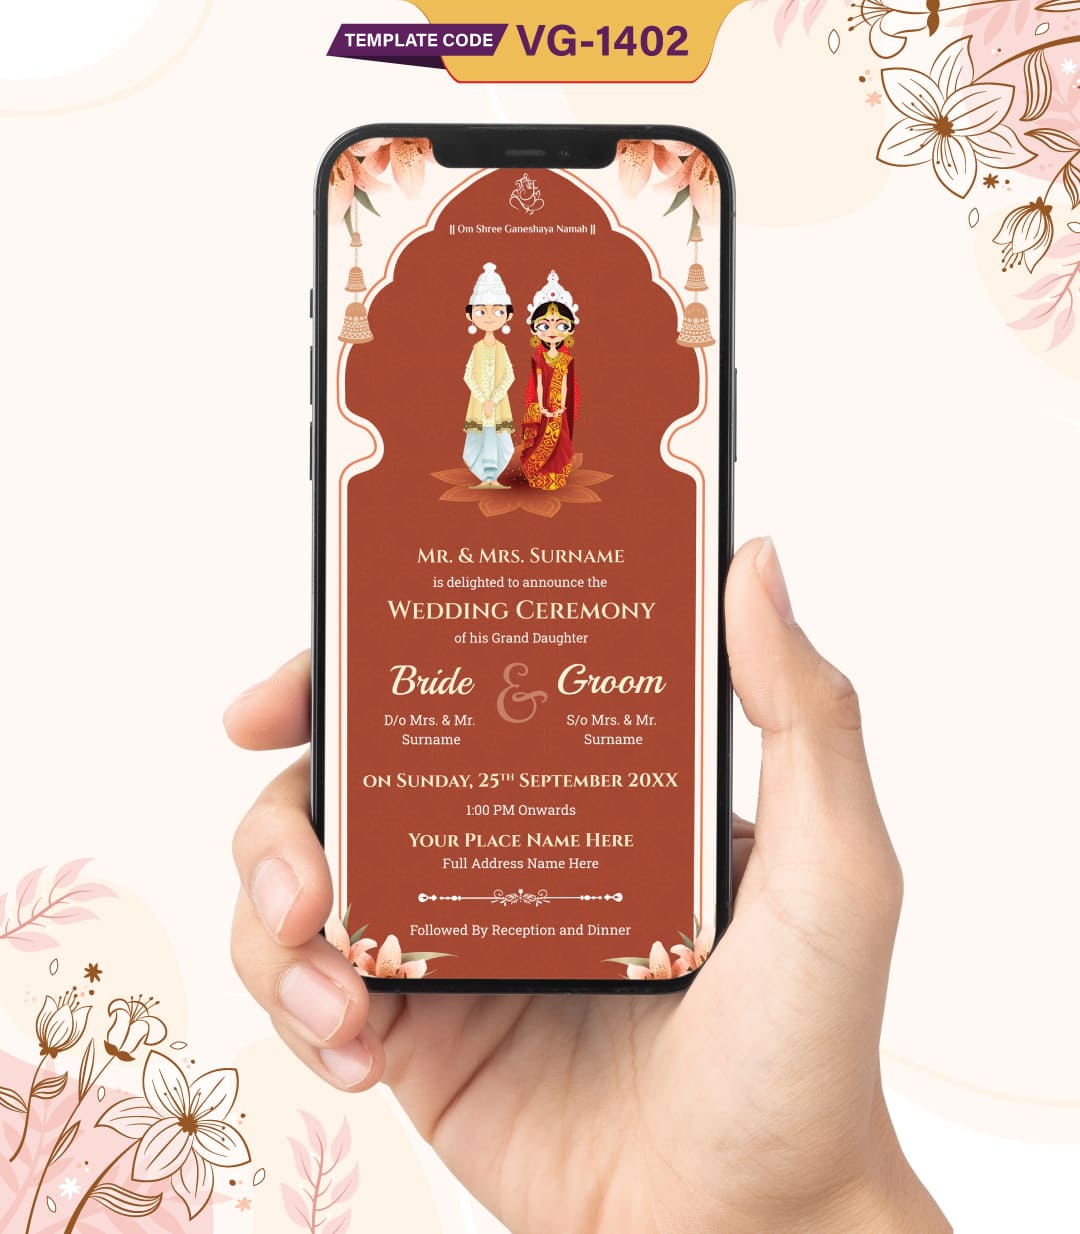 Bengali Wedding Ceremony Invitation Card